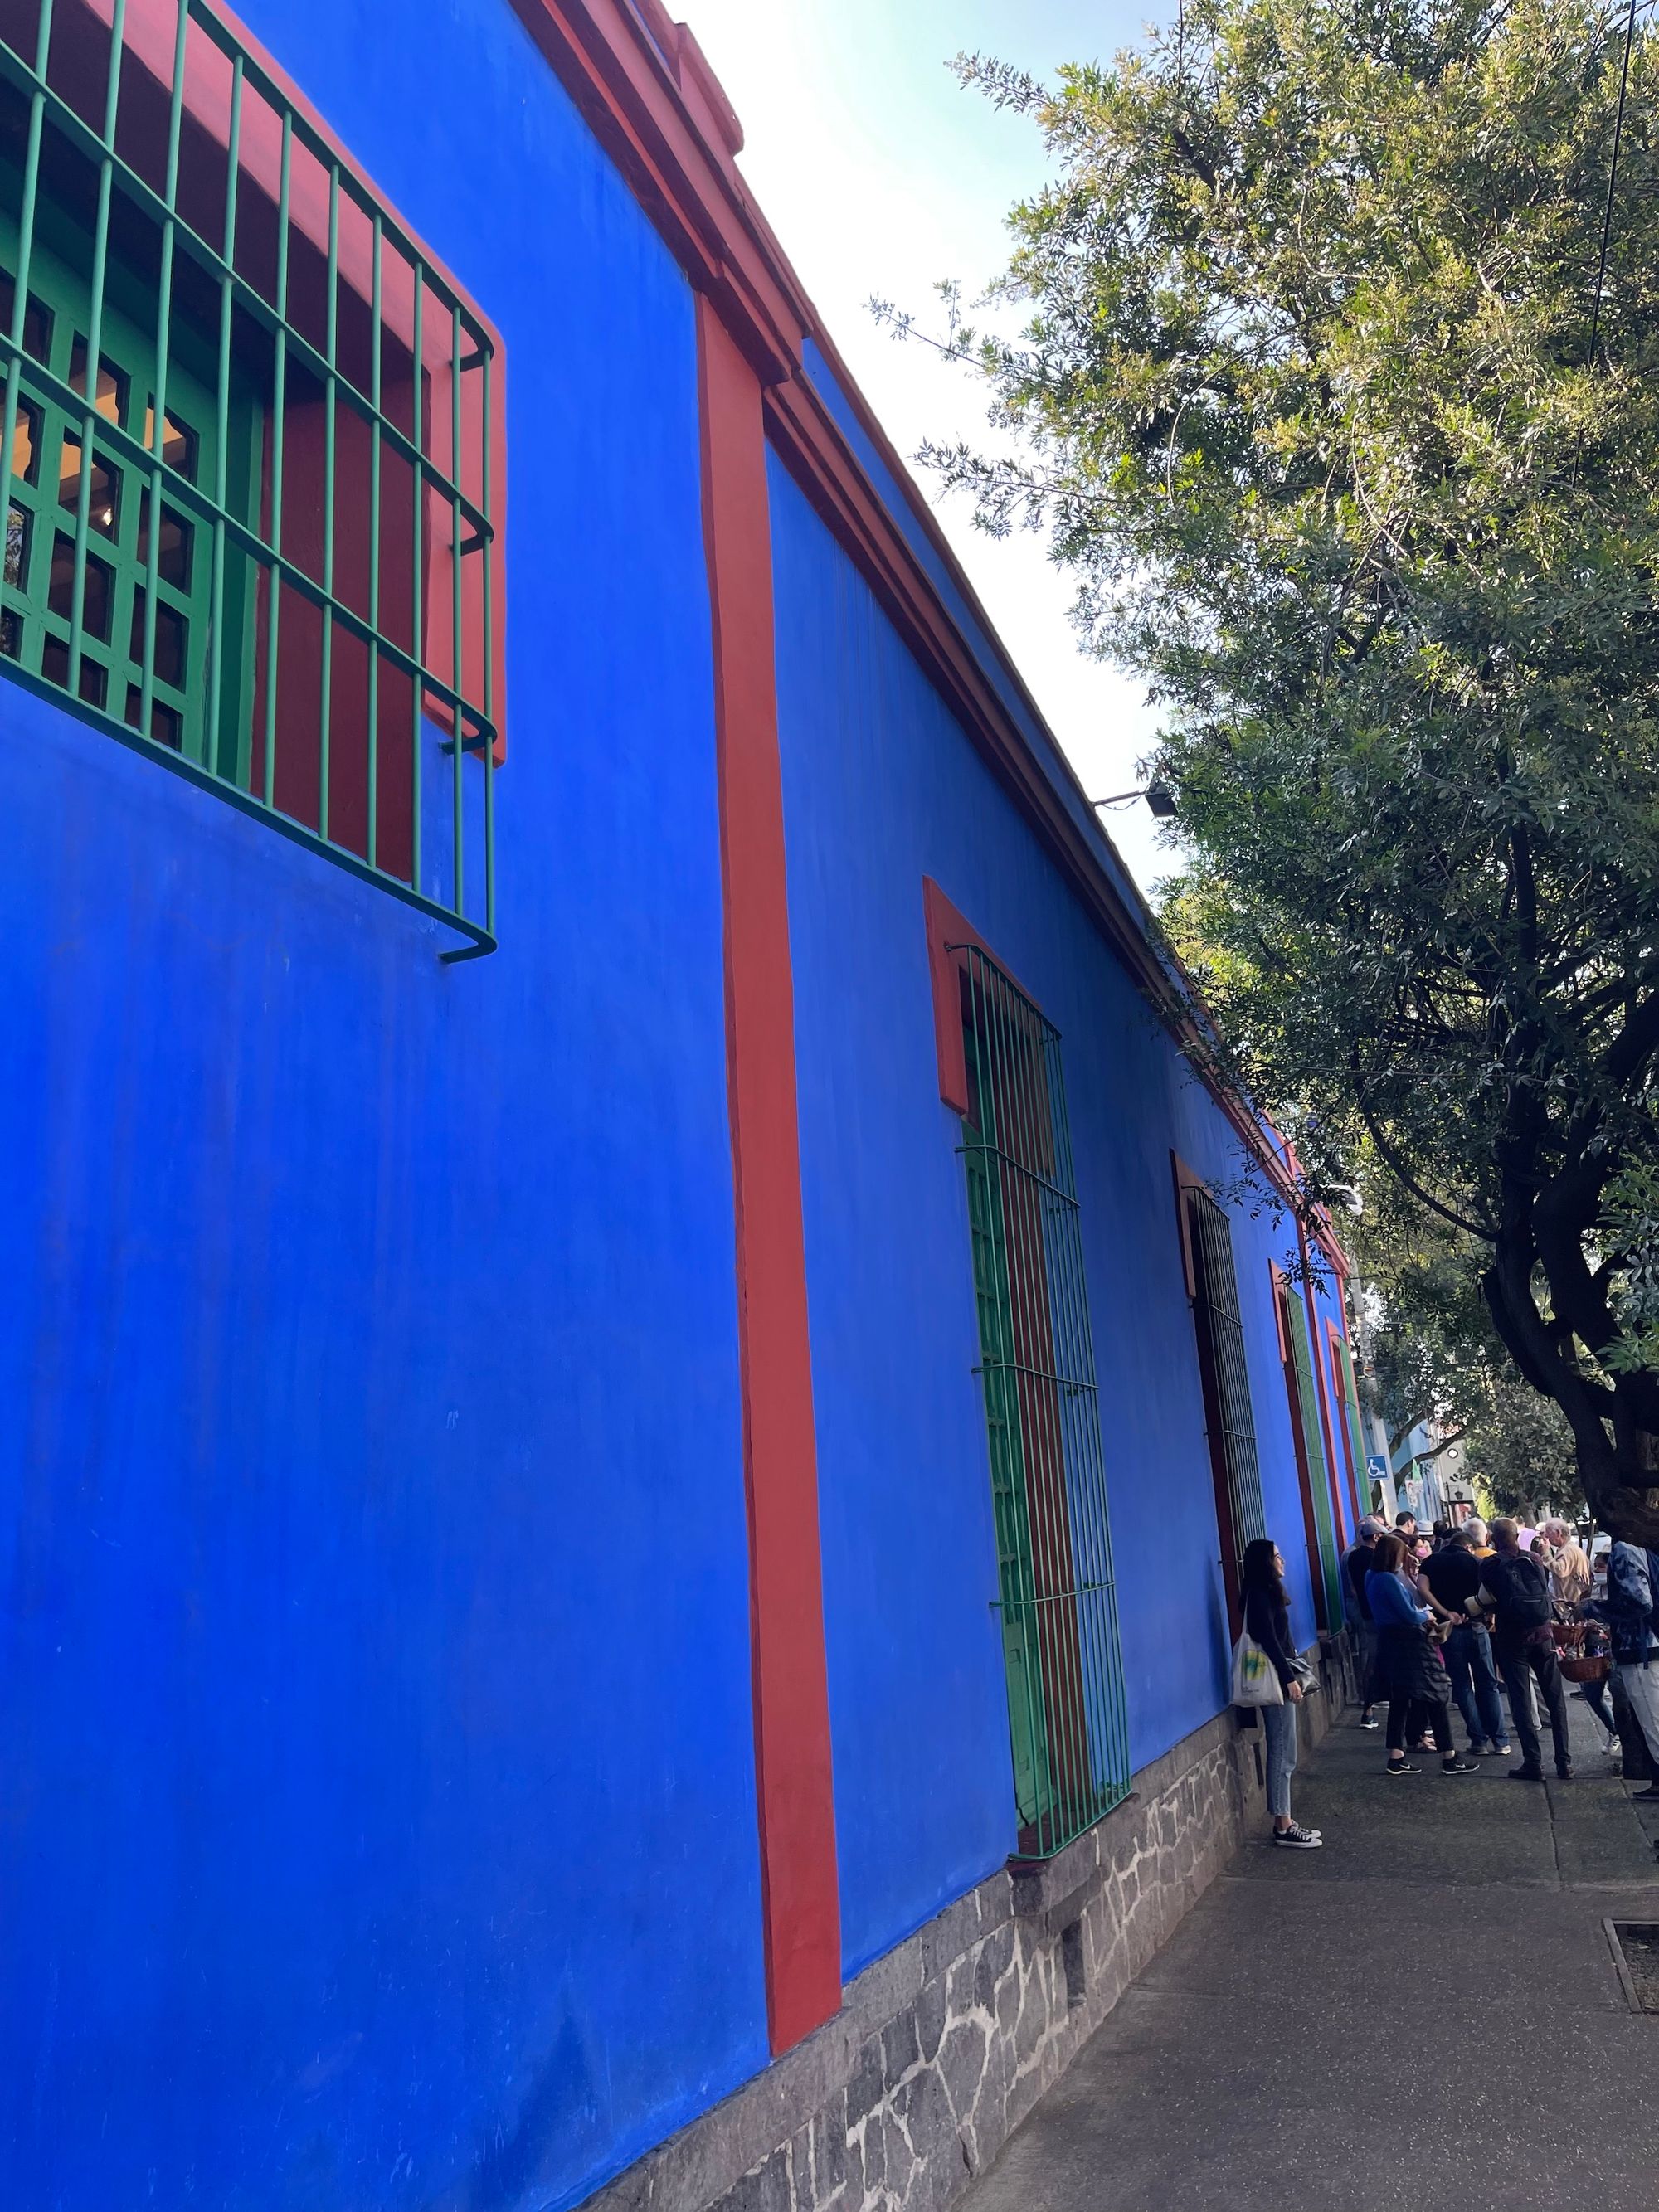 I enjoy the deep blue, red, and green of Frida Kahlo's Casa Azul.